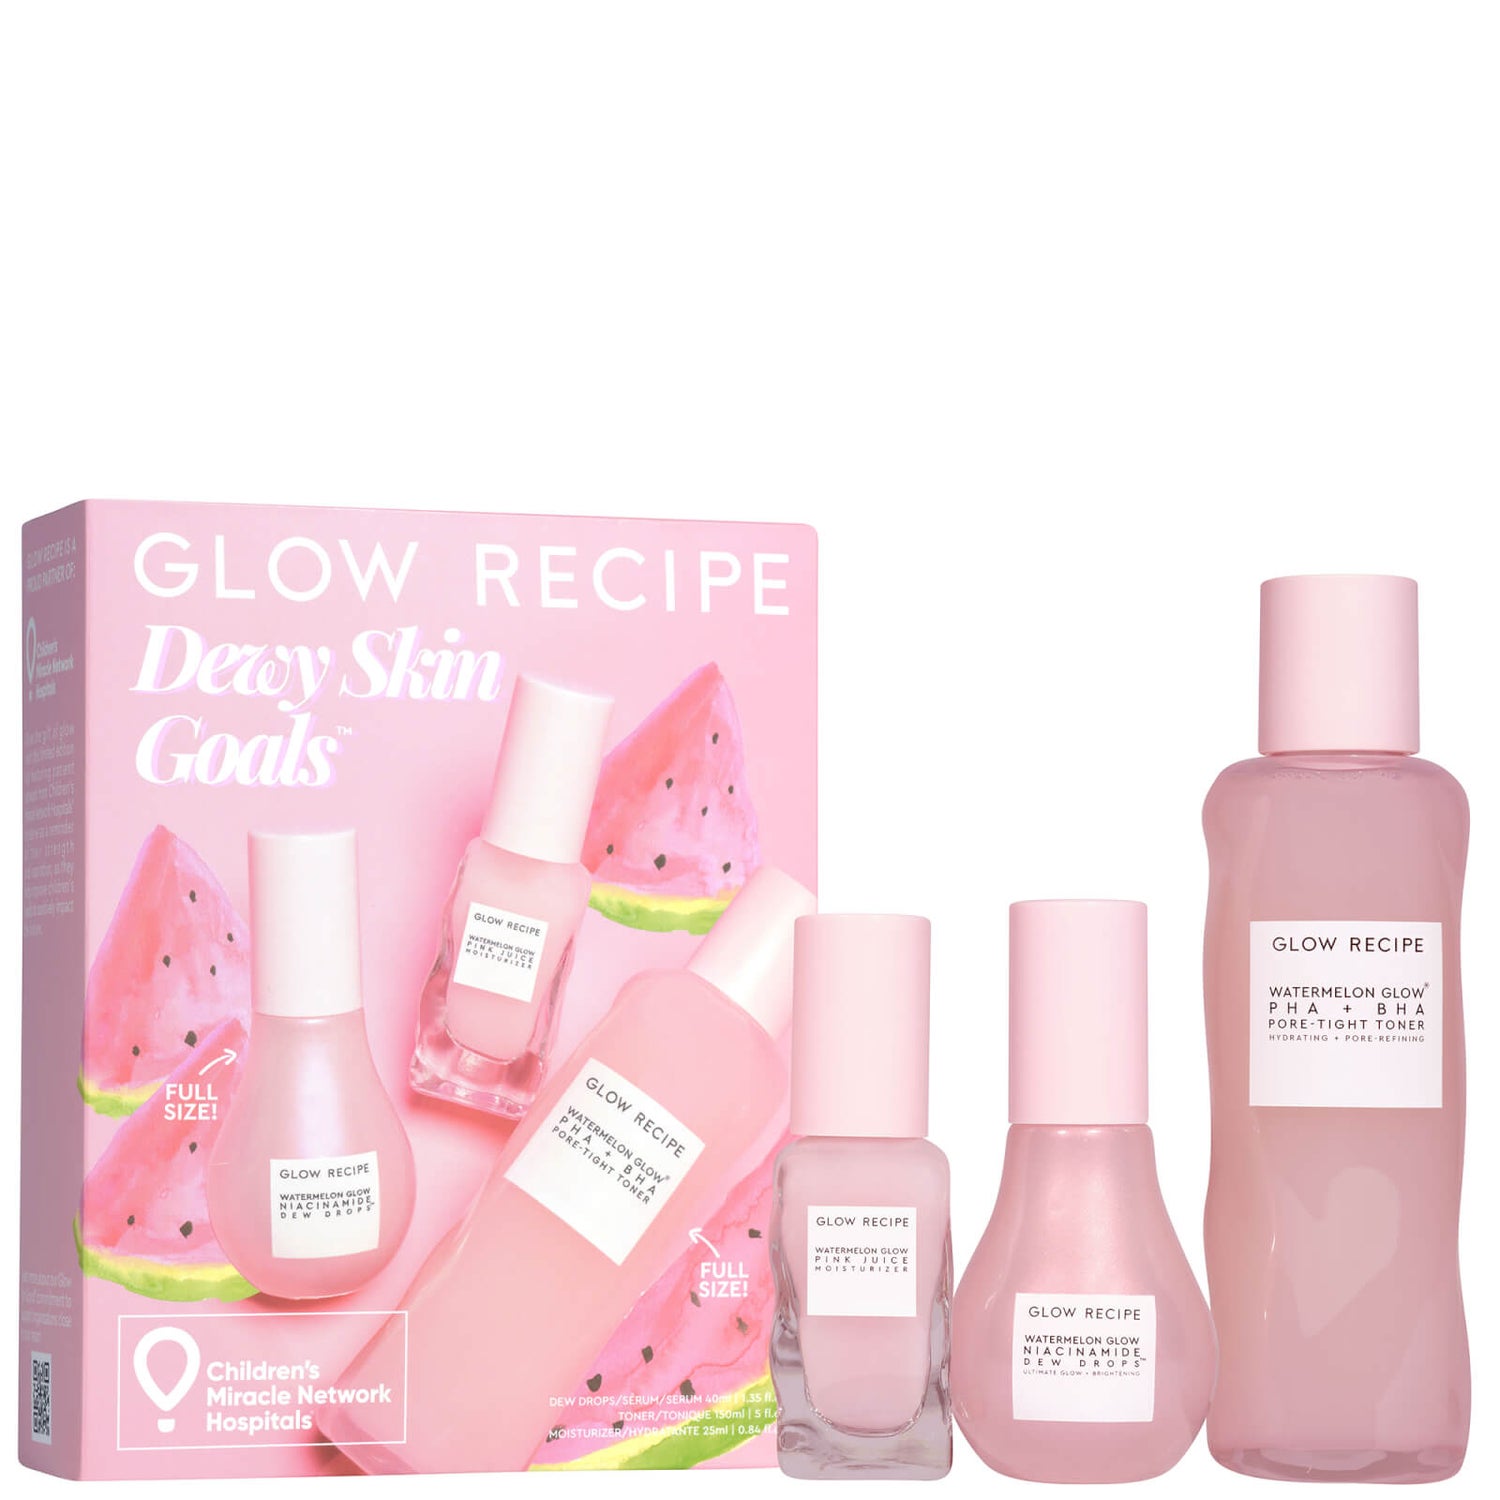 Glow Recipe Dewy Skin Goals (Worth 72)